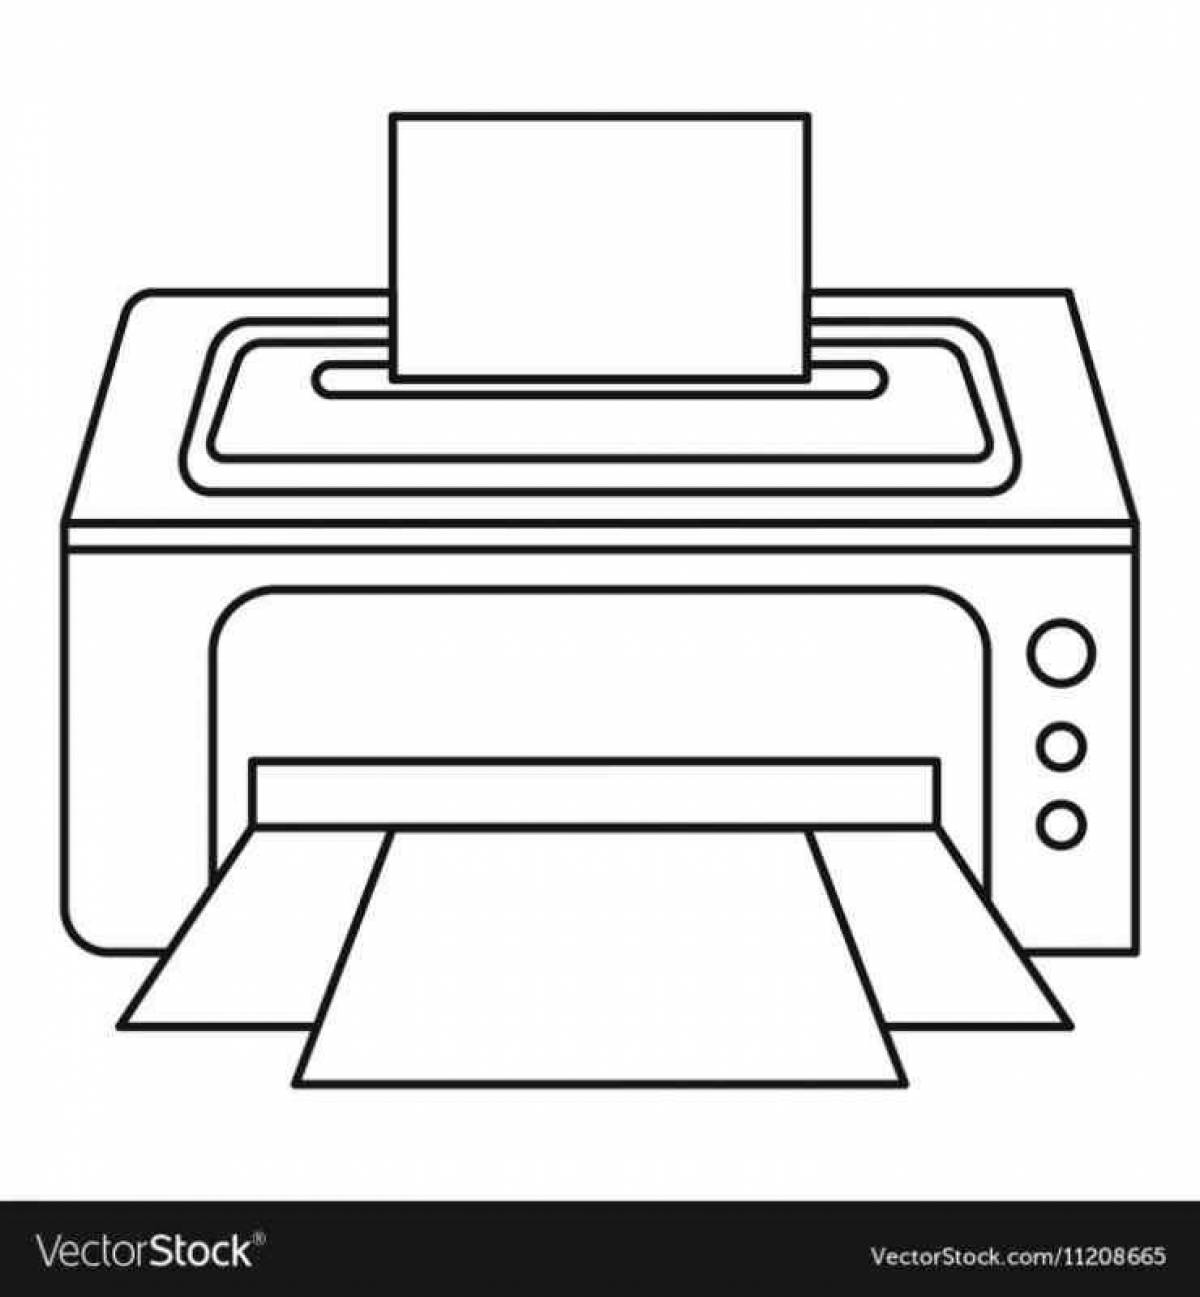 Special printer coloring page